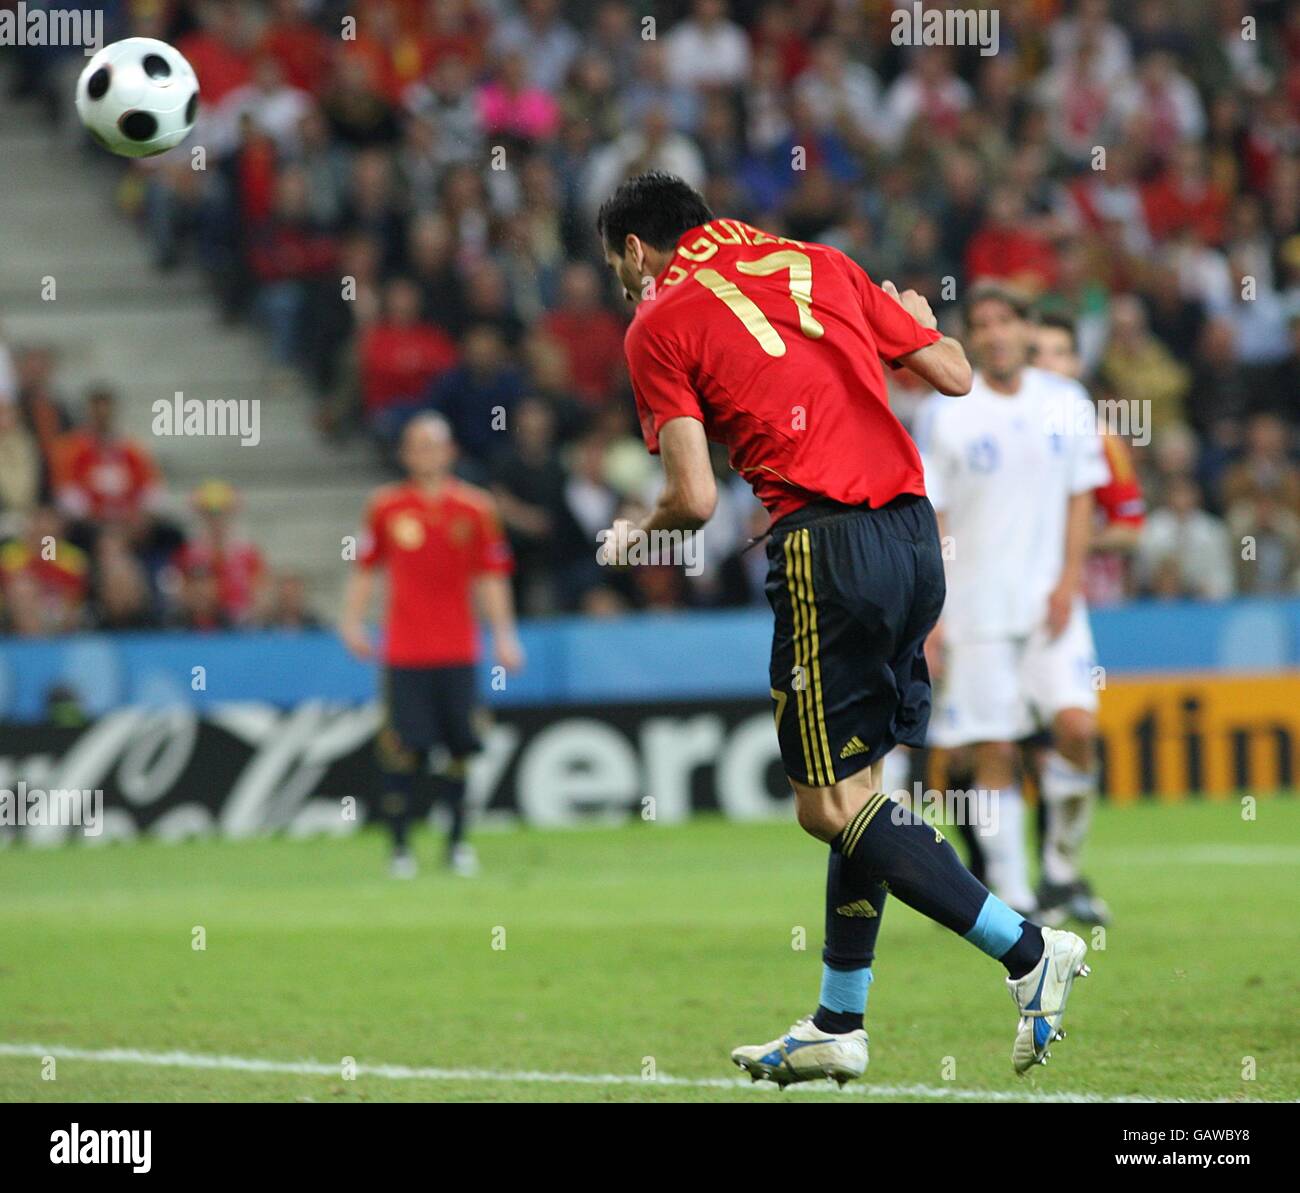 Soccer - UEFA European Championship 2008 - Group D - Greece v Spain - Wals Siezenheim Stadium. Spain's Daniel Guiza heads home the winning goal Stock Photo